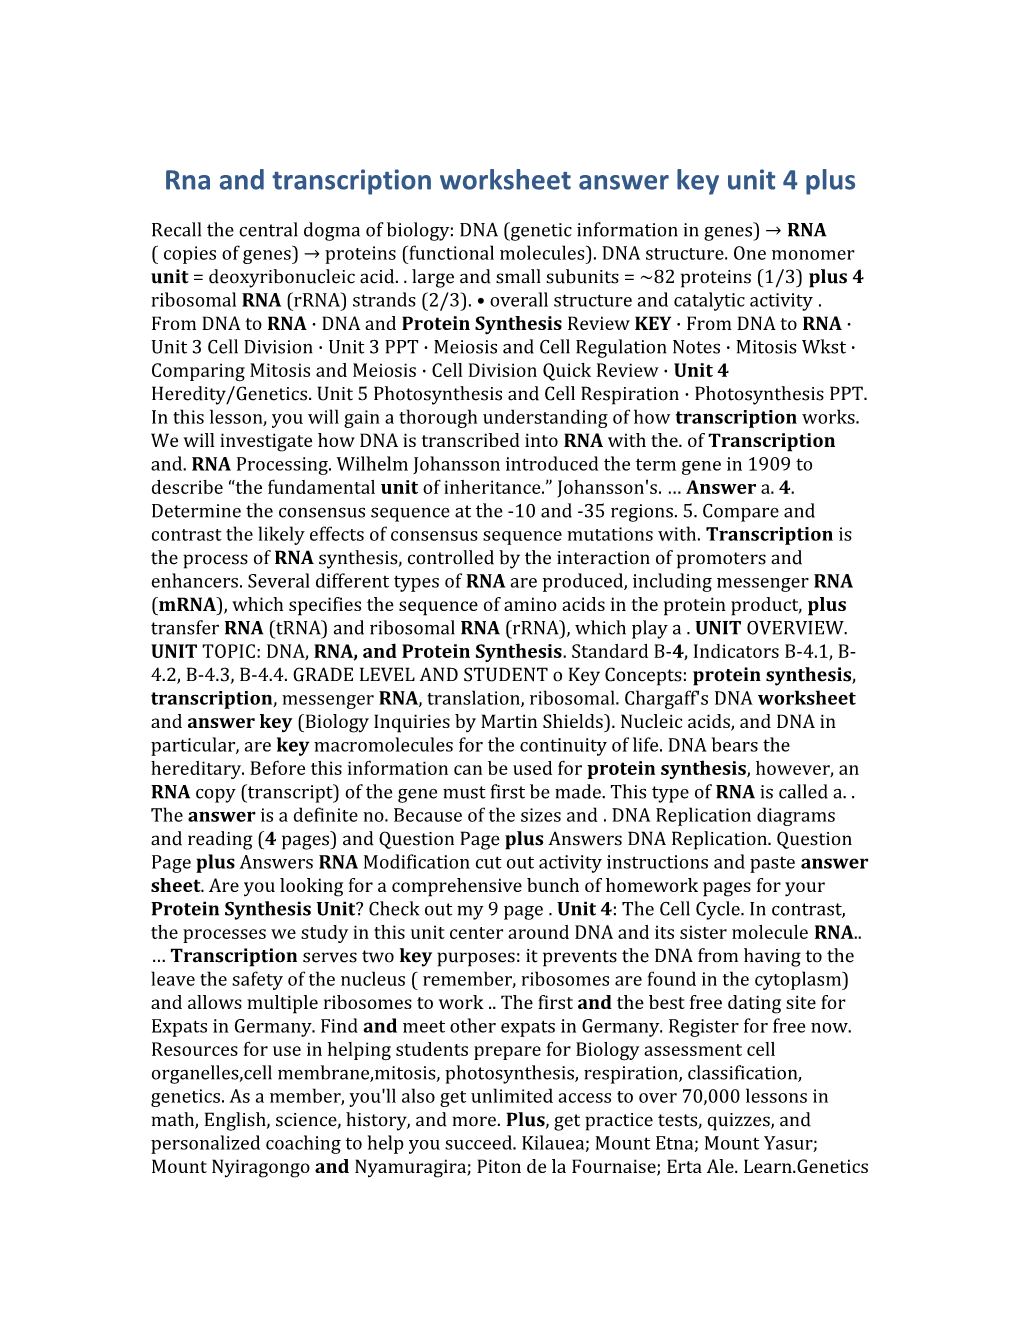 Rna and Transcription Worksheet Answer Key Unit 4 Plus